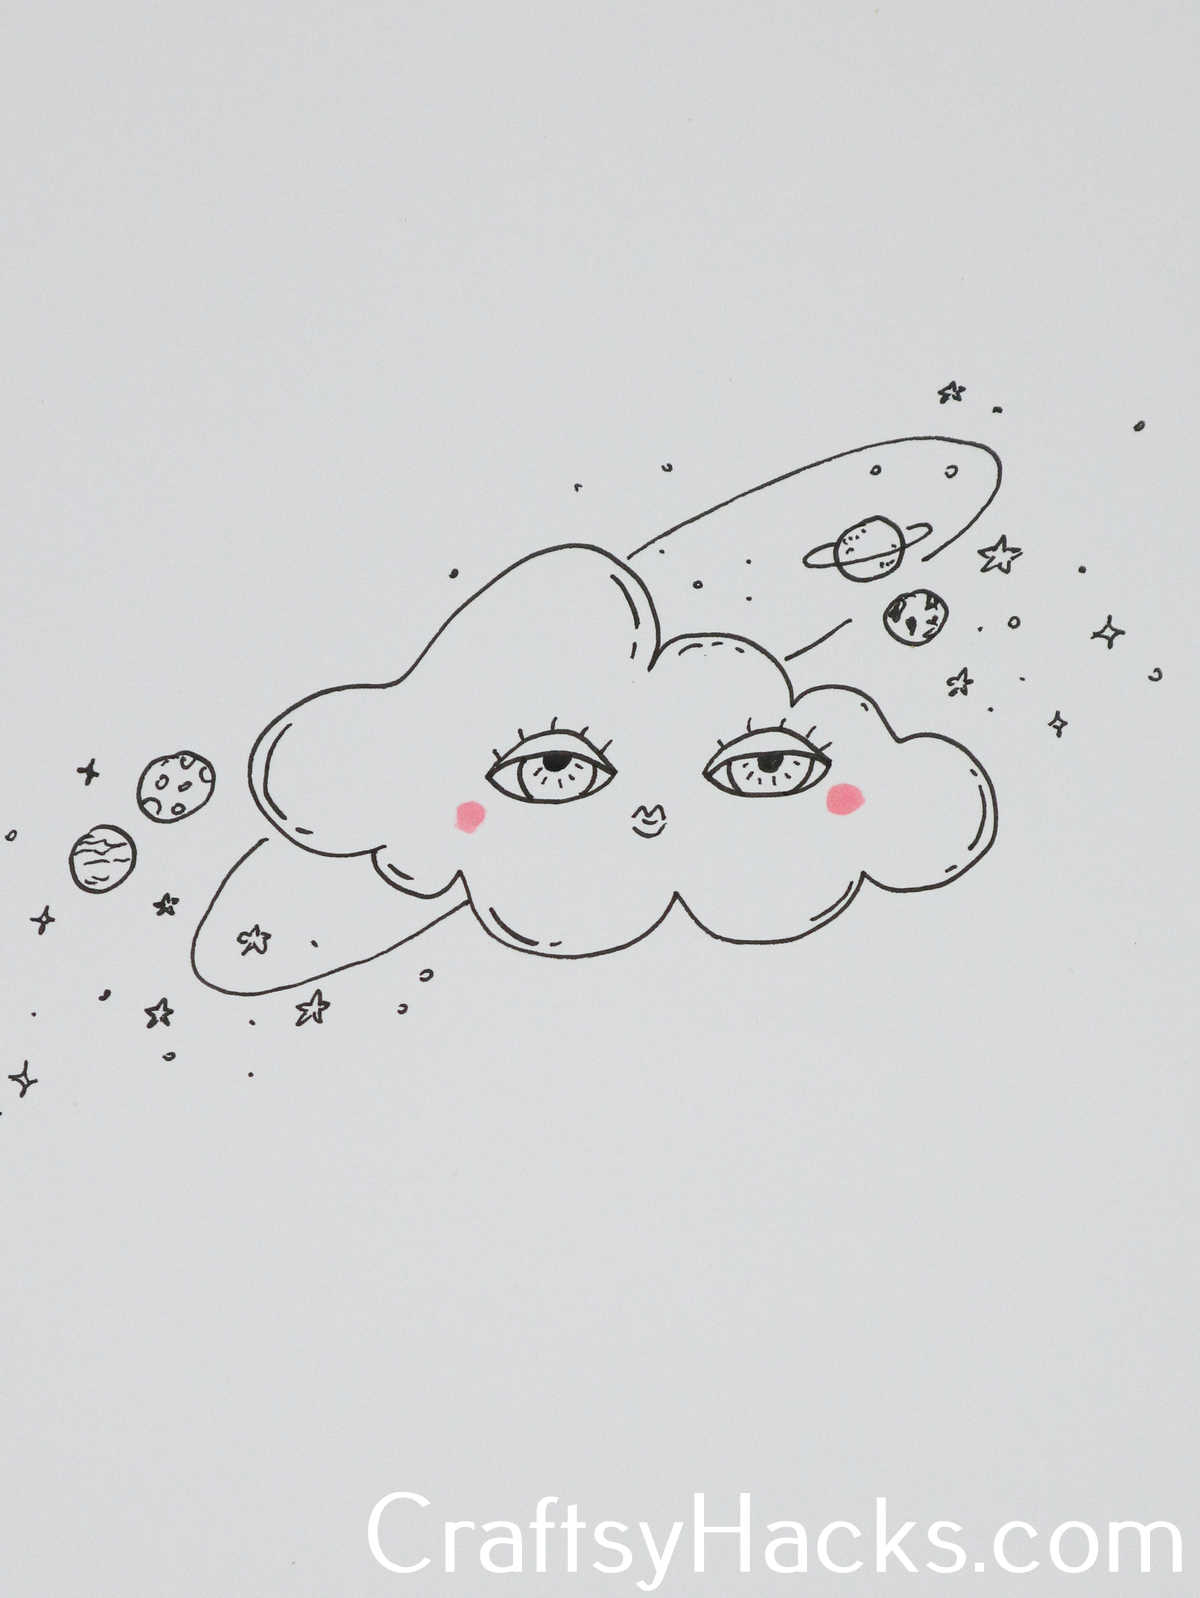 orbiting the cloud doodle